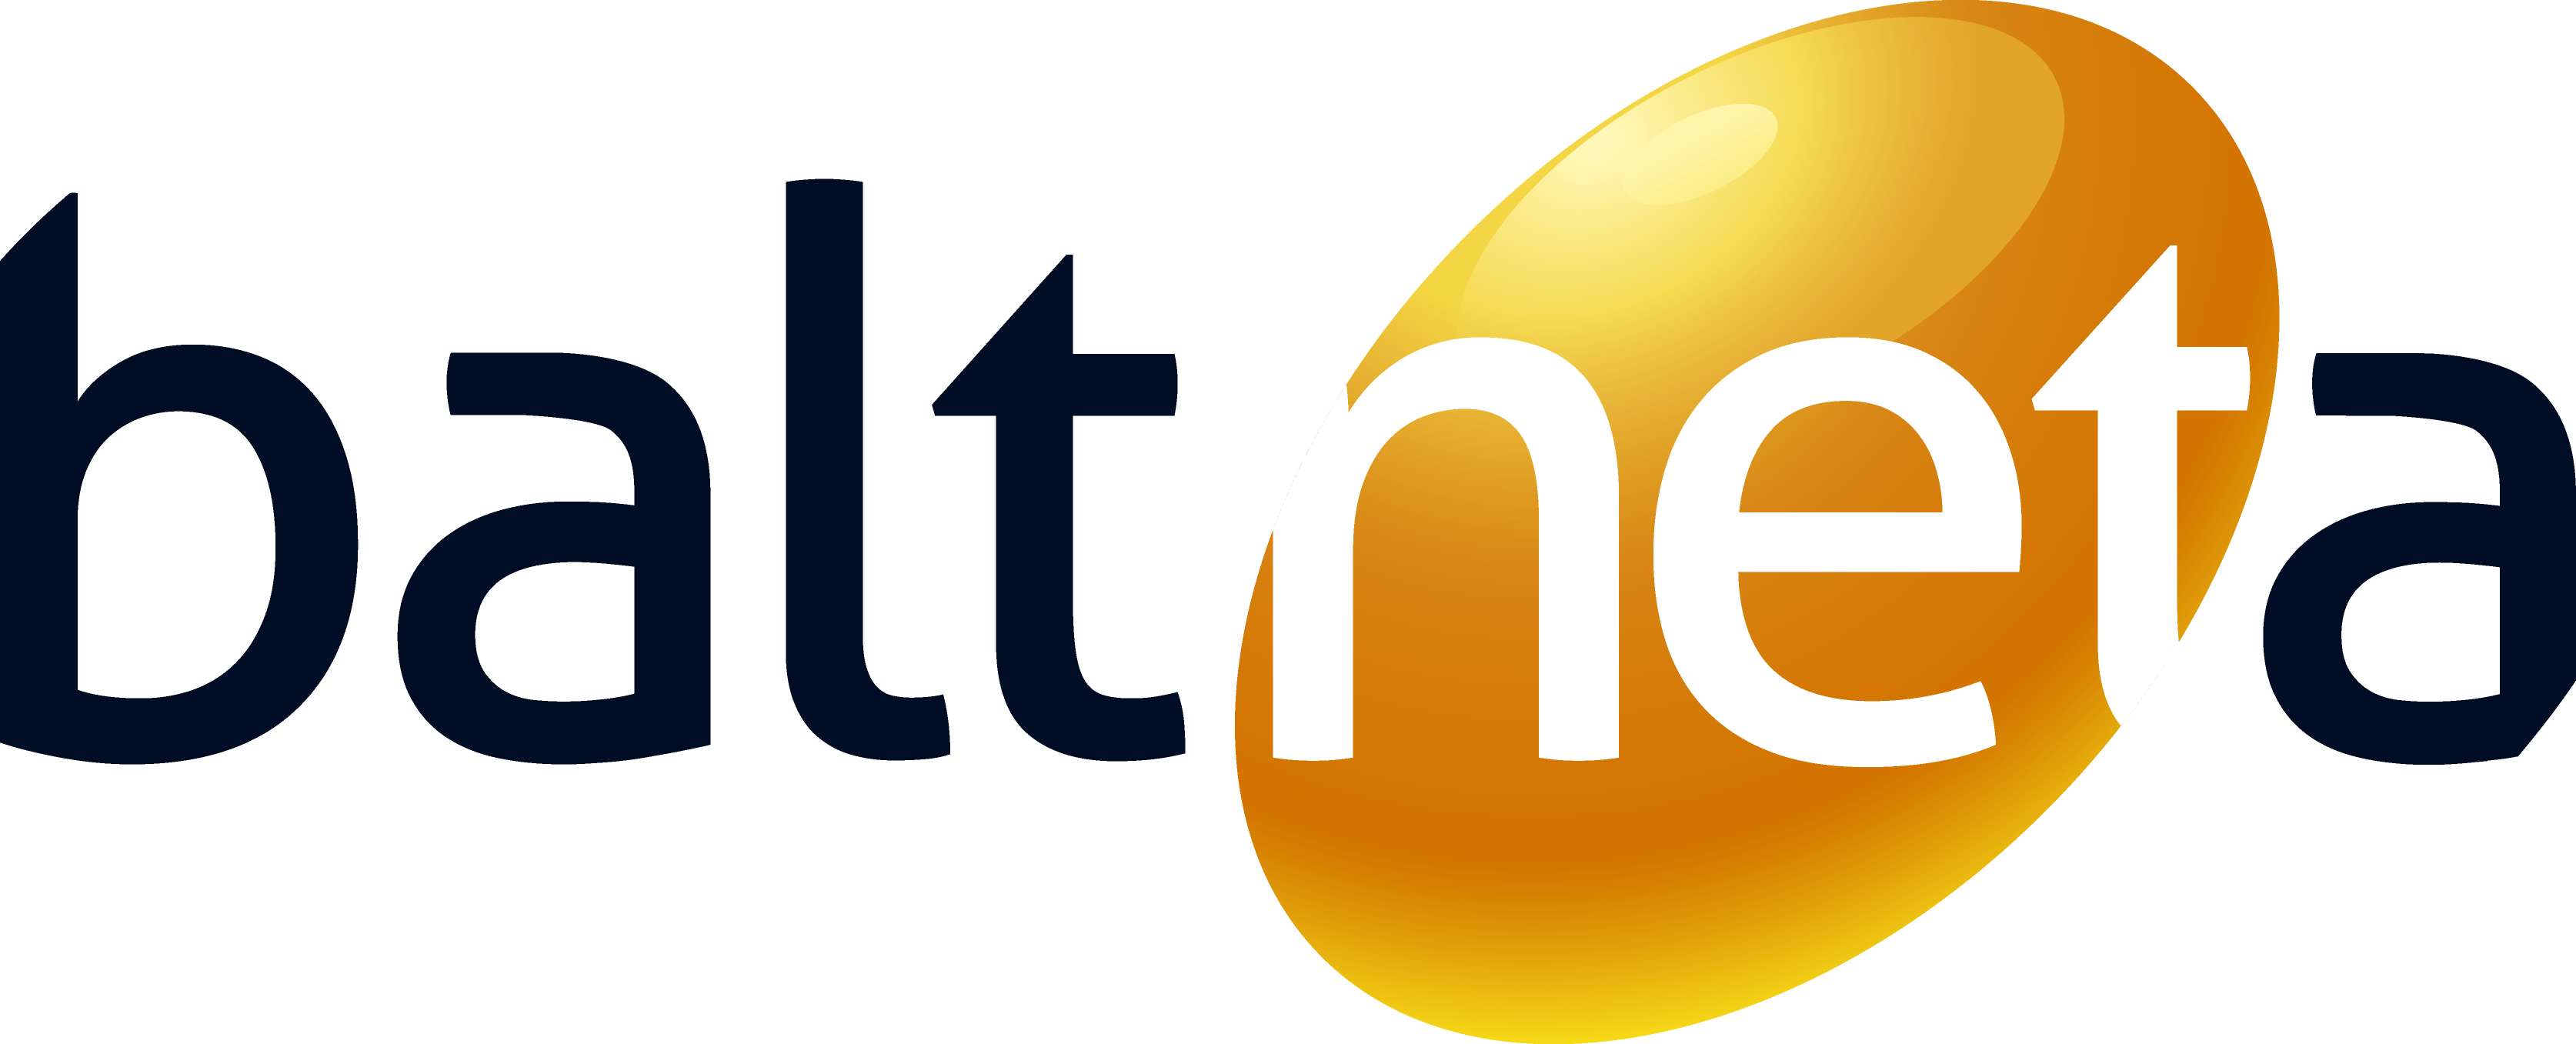 Балт. Интер Балт сервис лого. Europian логотип. Afranet логотип. Балт ру